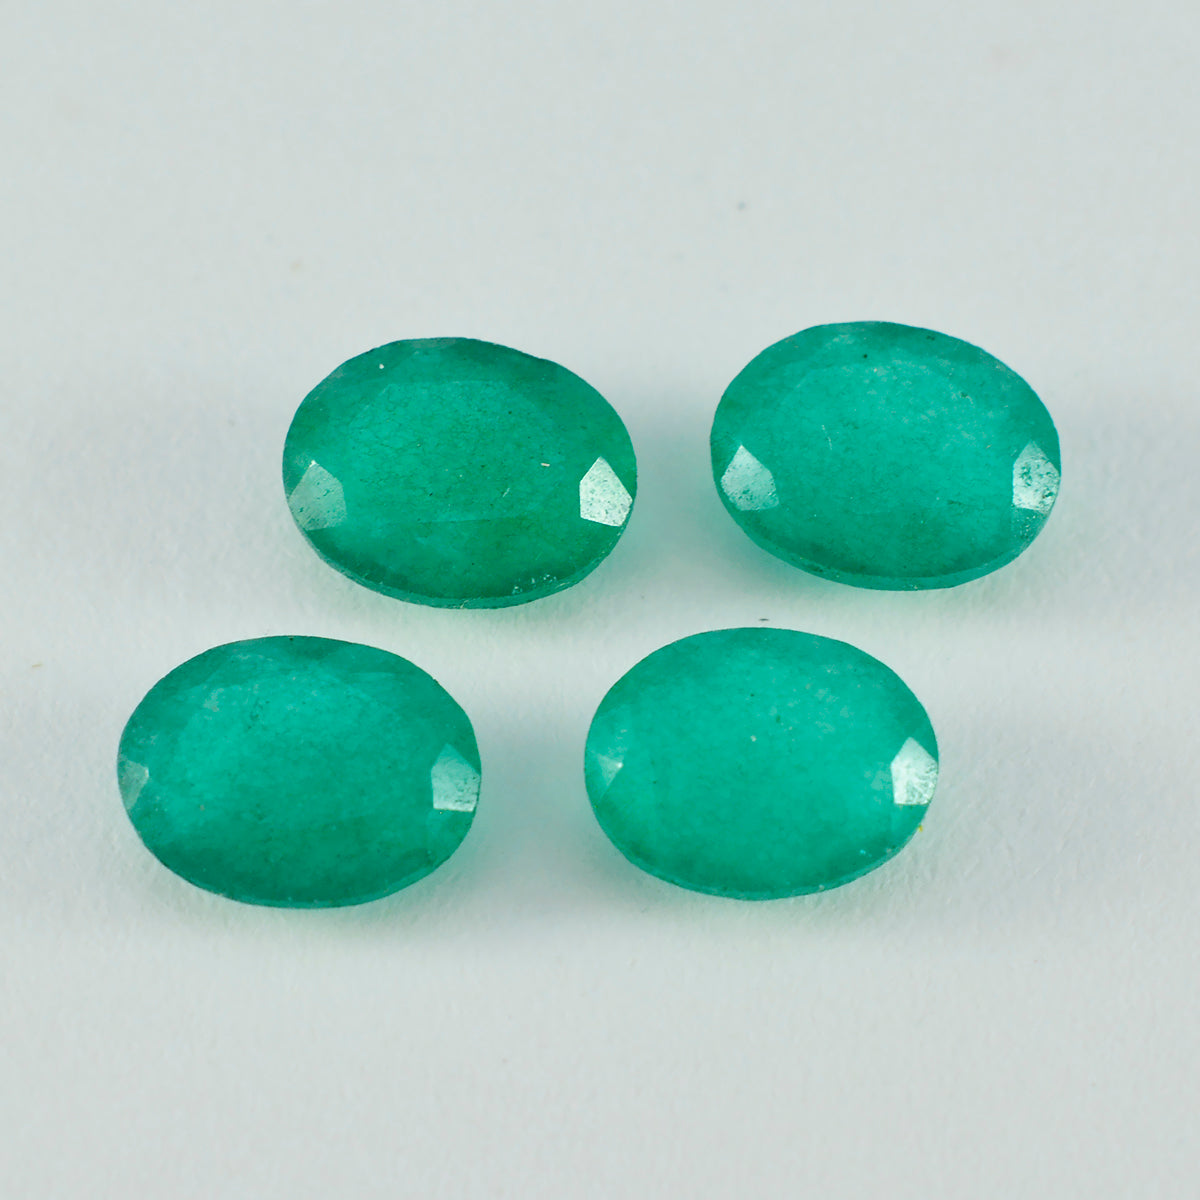 riyogems 1 pz genuino diaspro verde sfaccettato 10x14 mm forma ovale gemme sfuse di ottima qualità